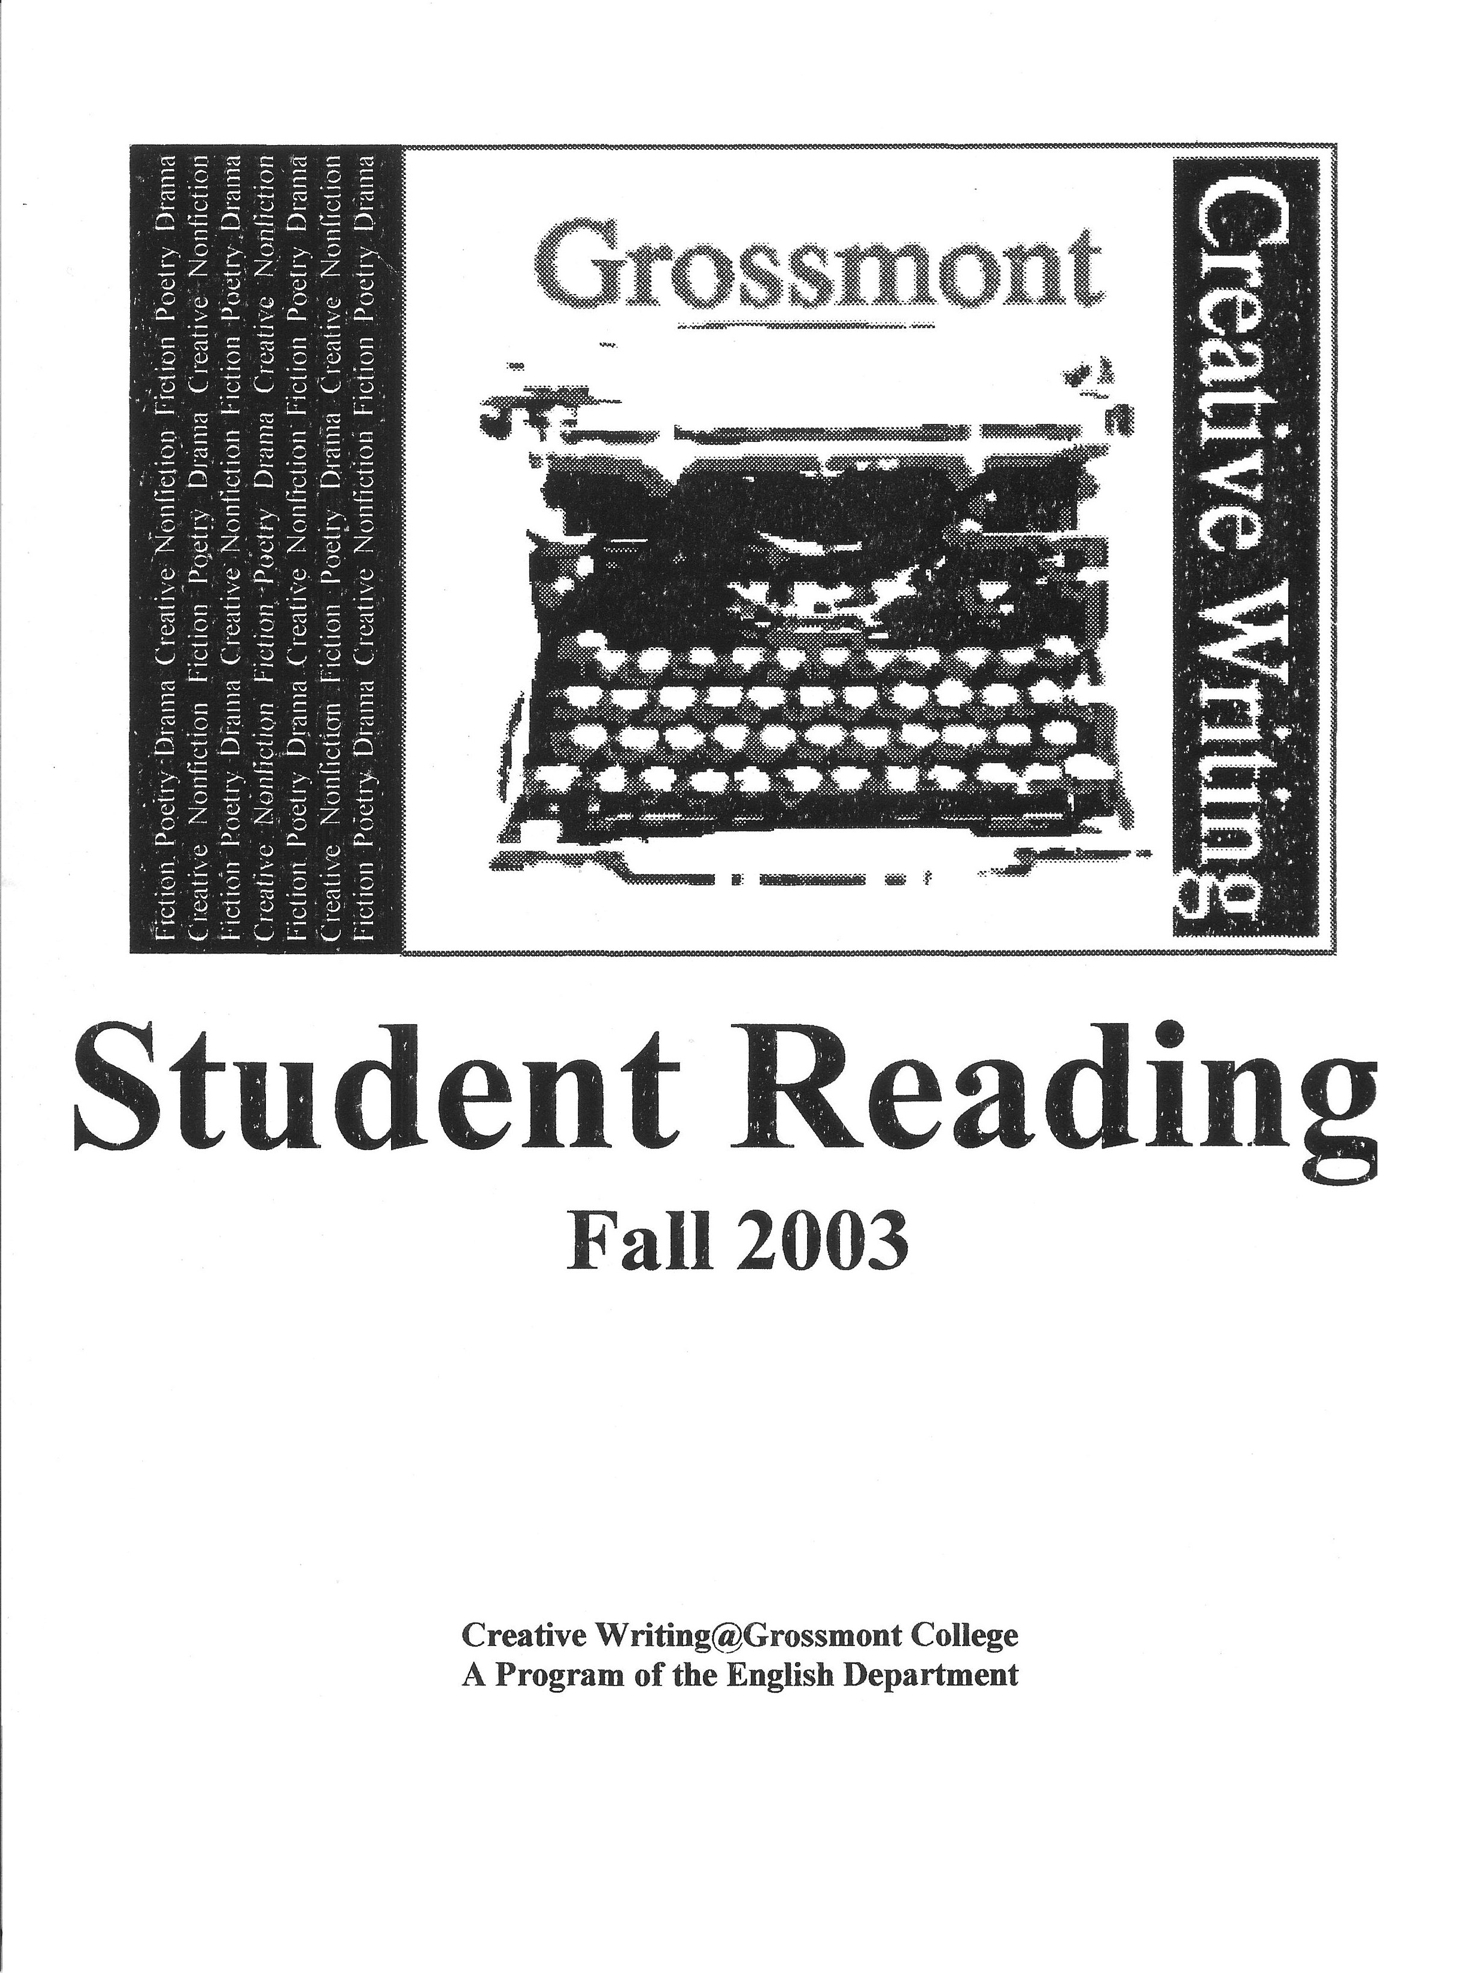 2003 Fall Student Reading program cover